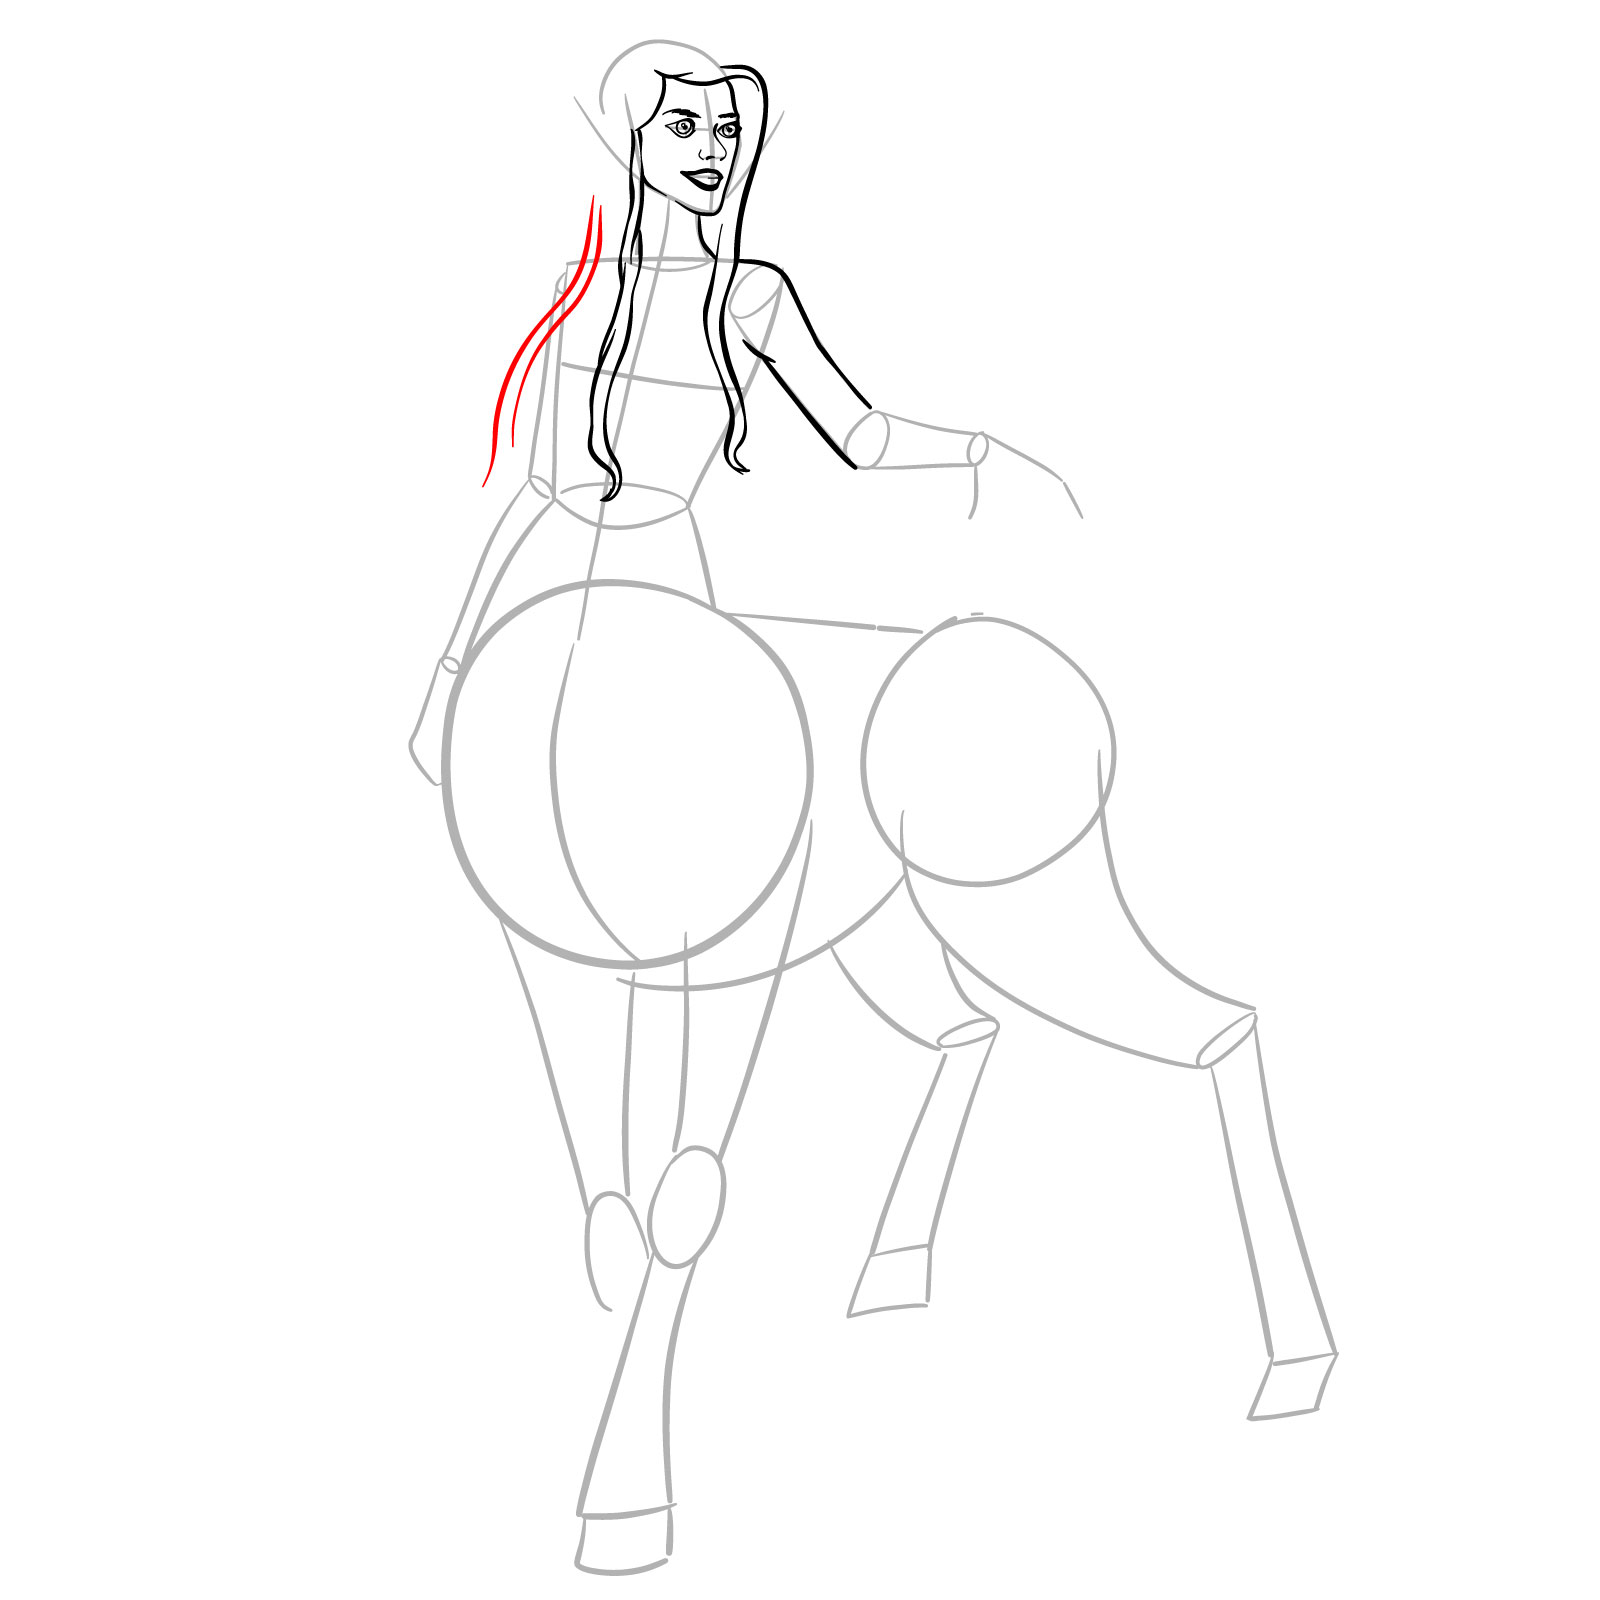 How to draw a Female Centaur - step 14